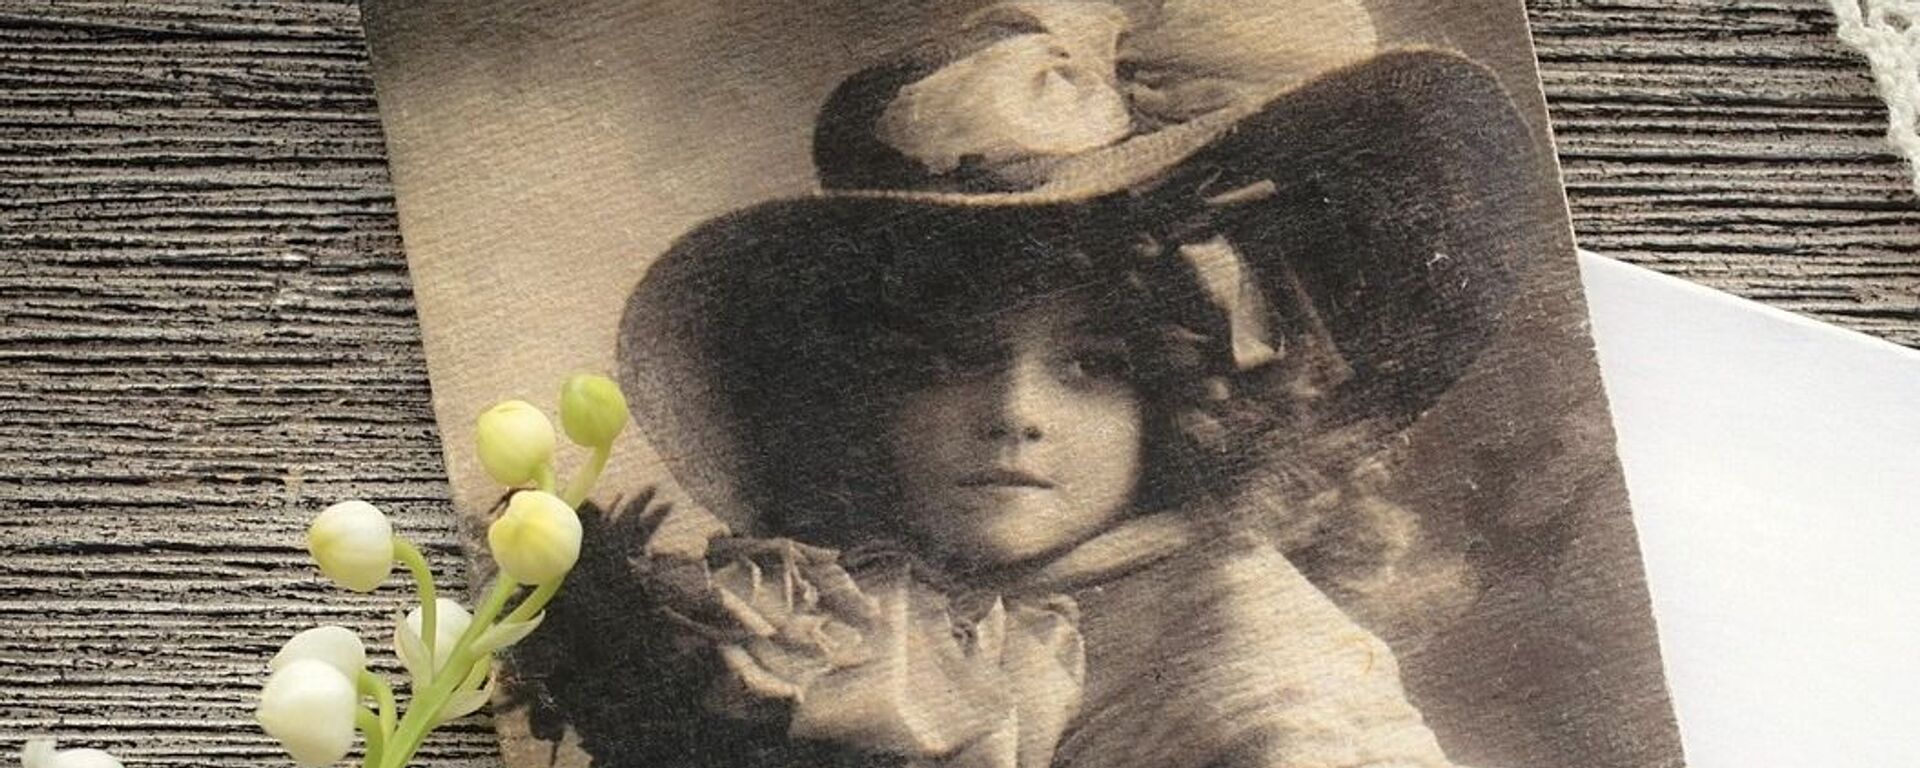 Stara fotografija devojke sa šeširom - Sputnik Srbija, 1920, 03.01.2021